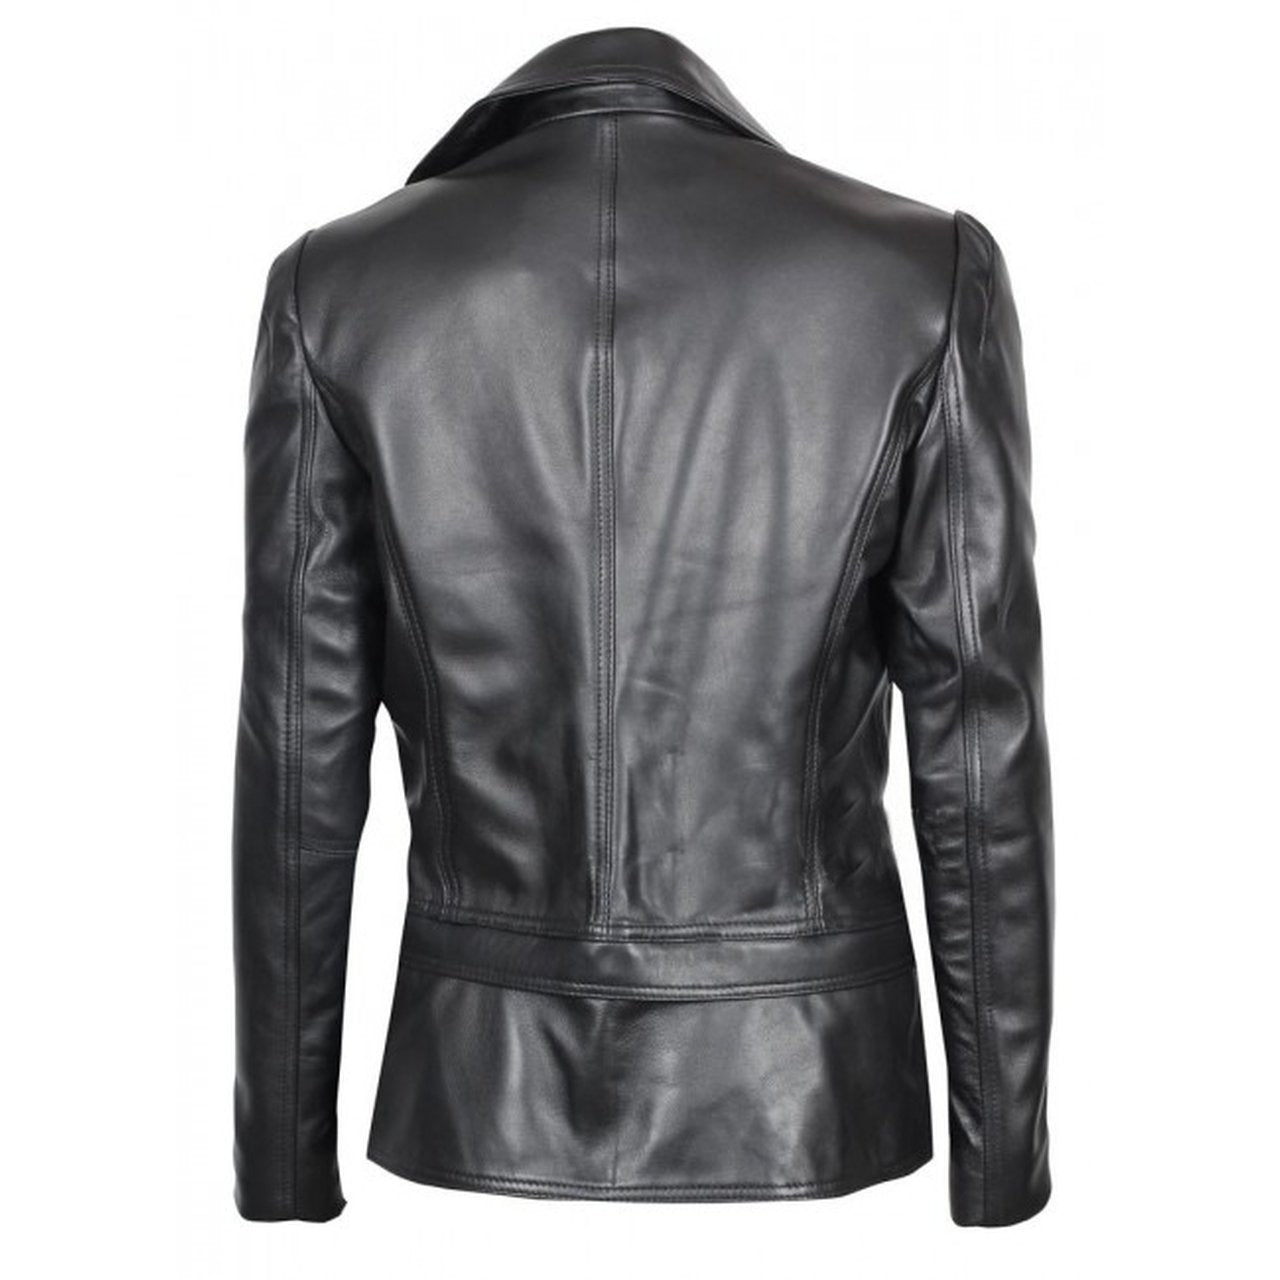 Asymmetrical Black Biker Jacket Women - Leather Jacket